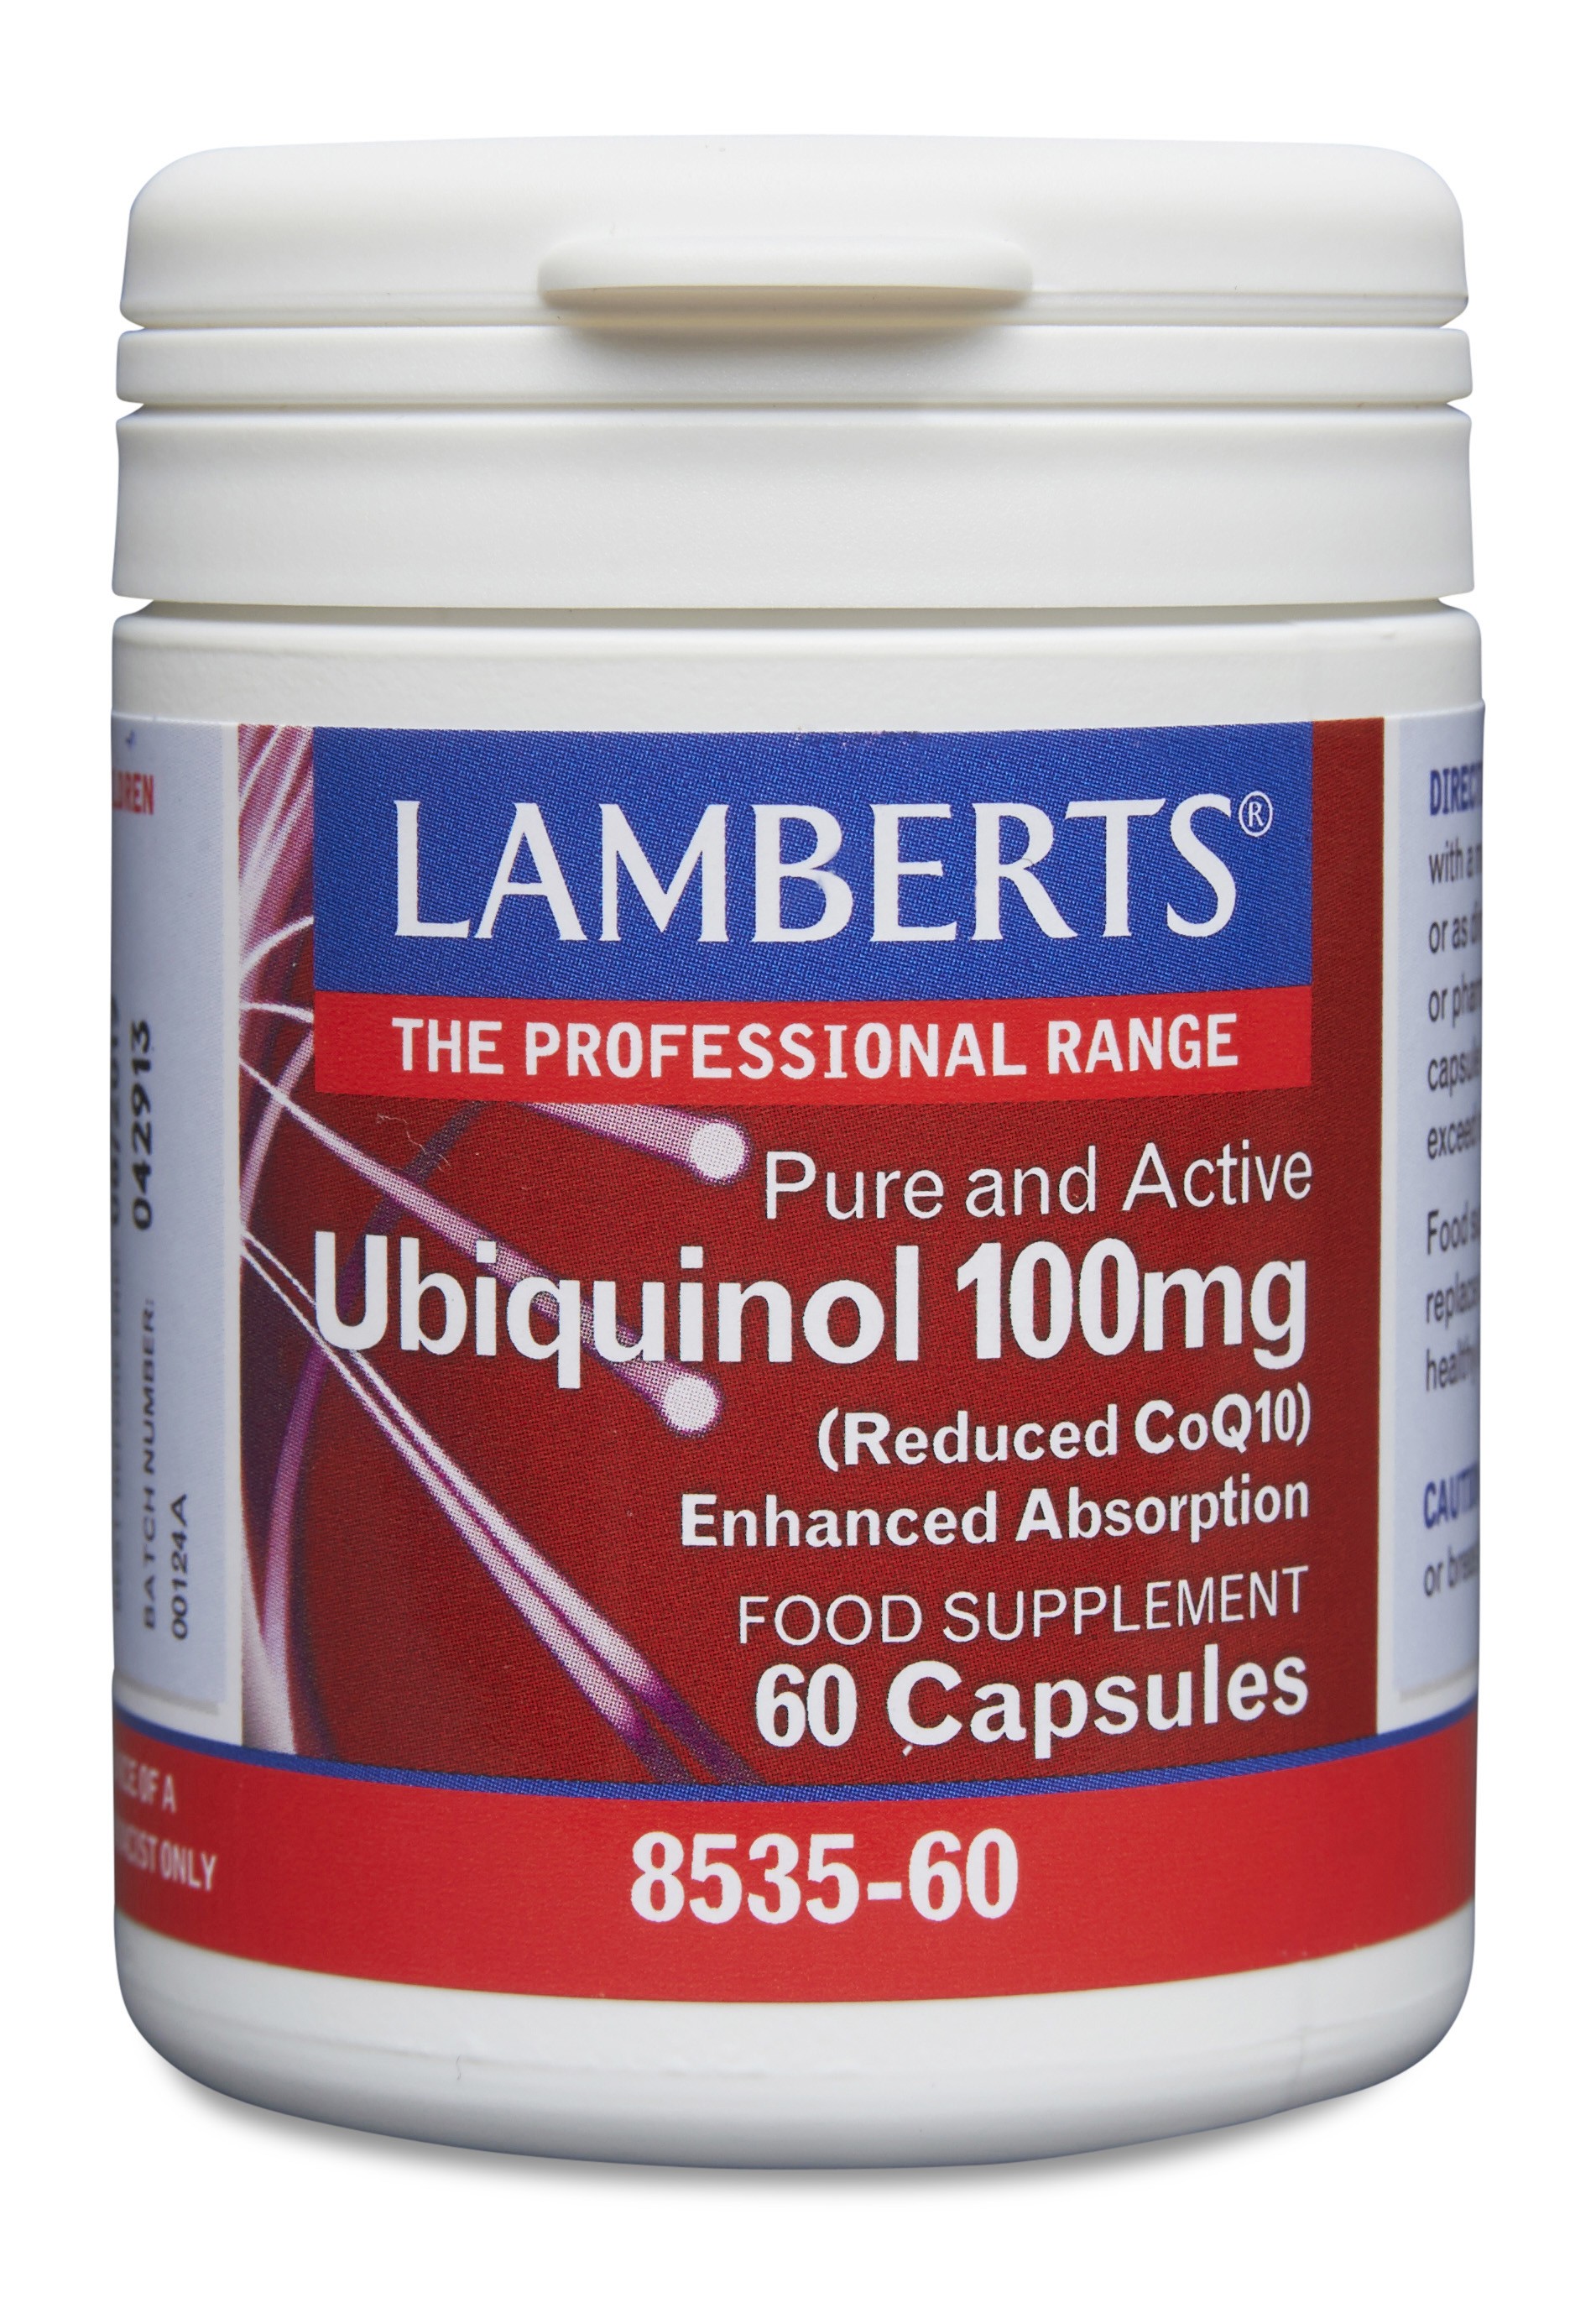 Lamberts Ubiquinol 100mg (Reduced Coq10)